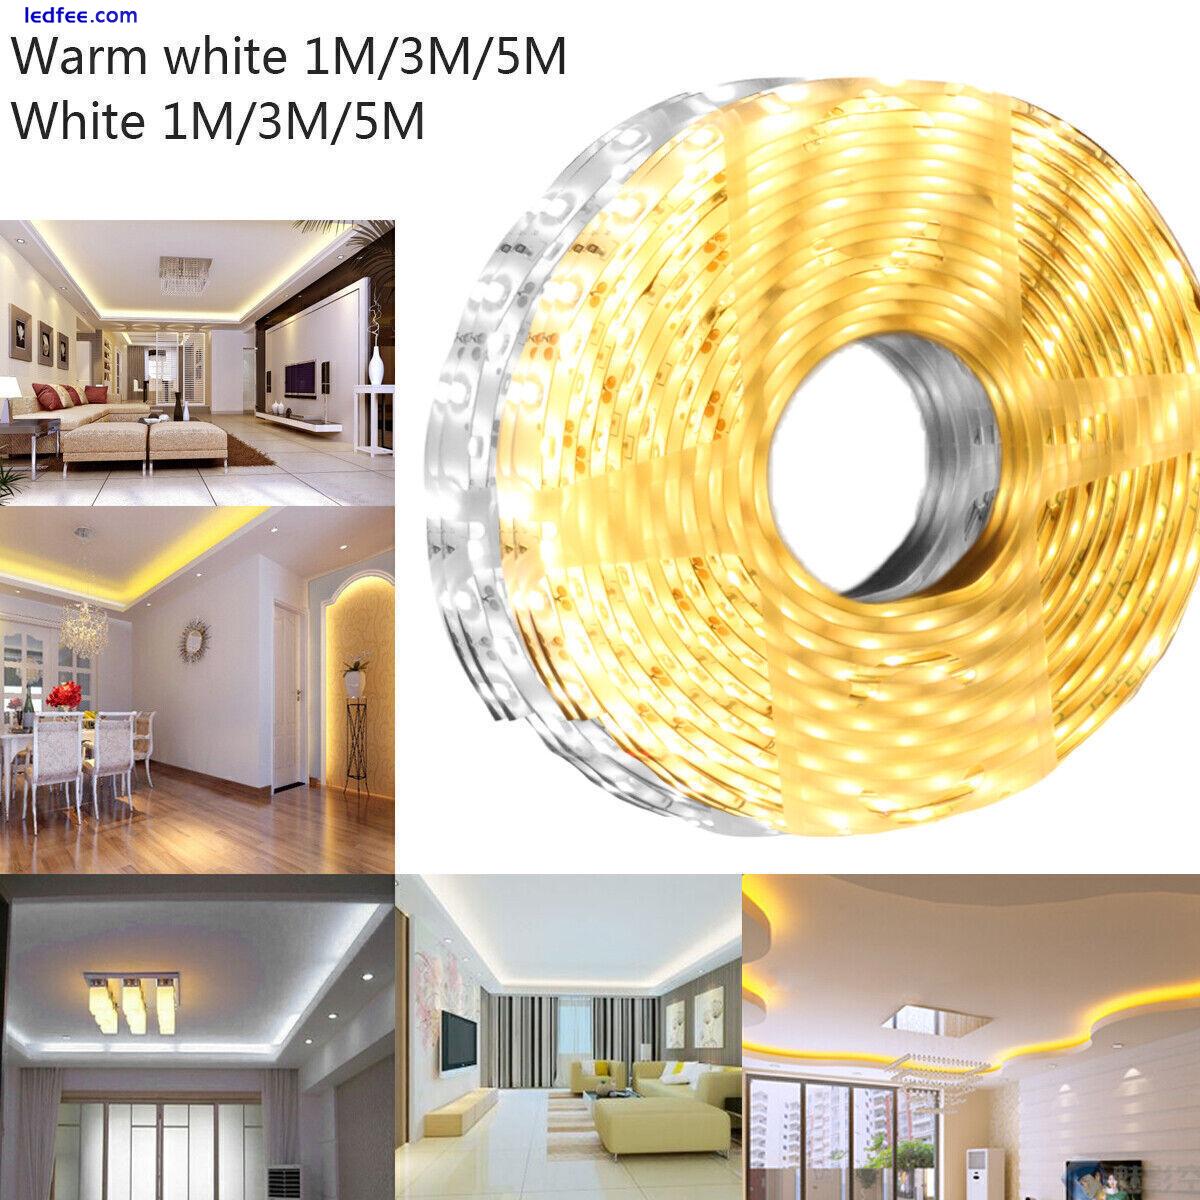 LED Strip Light Home Lighting 12V 5630 SMD White/Warm White Waterproof 1M/3M/5M 4 